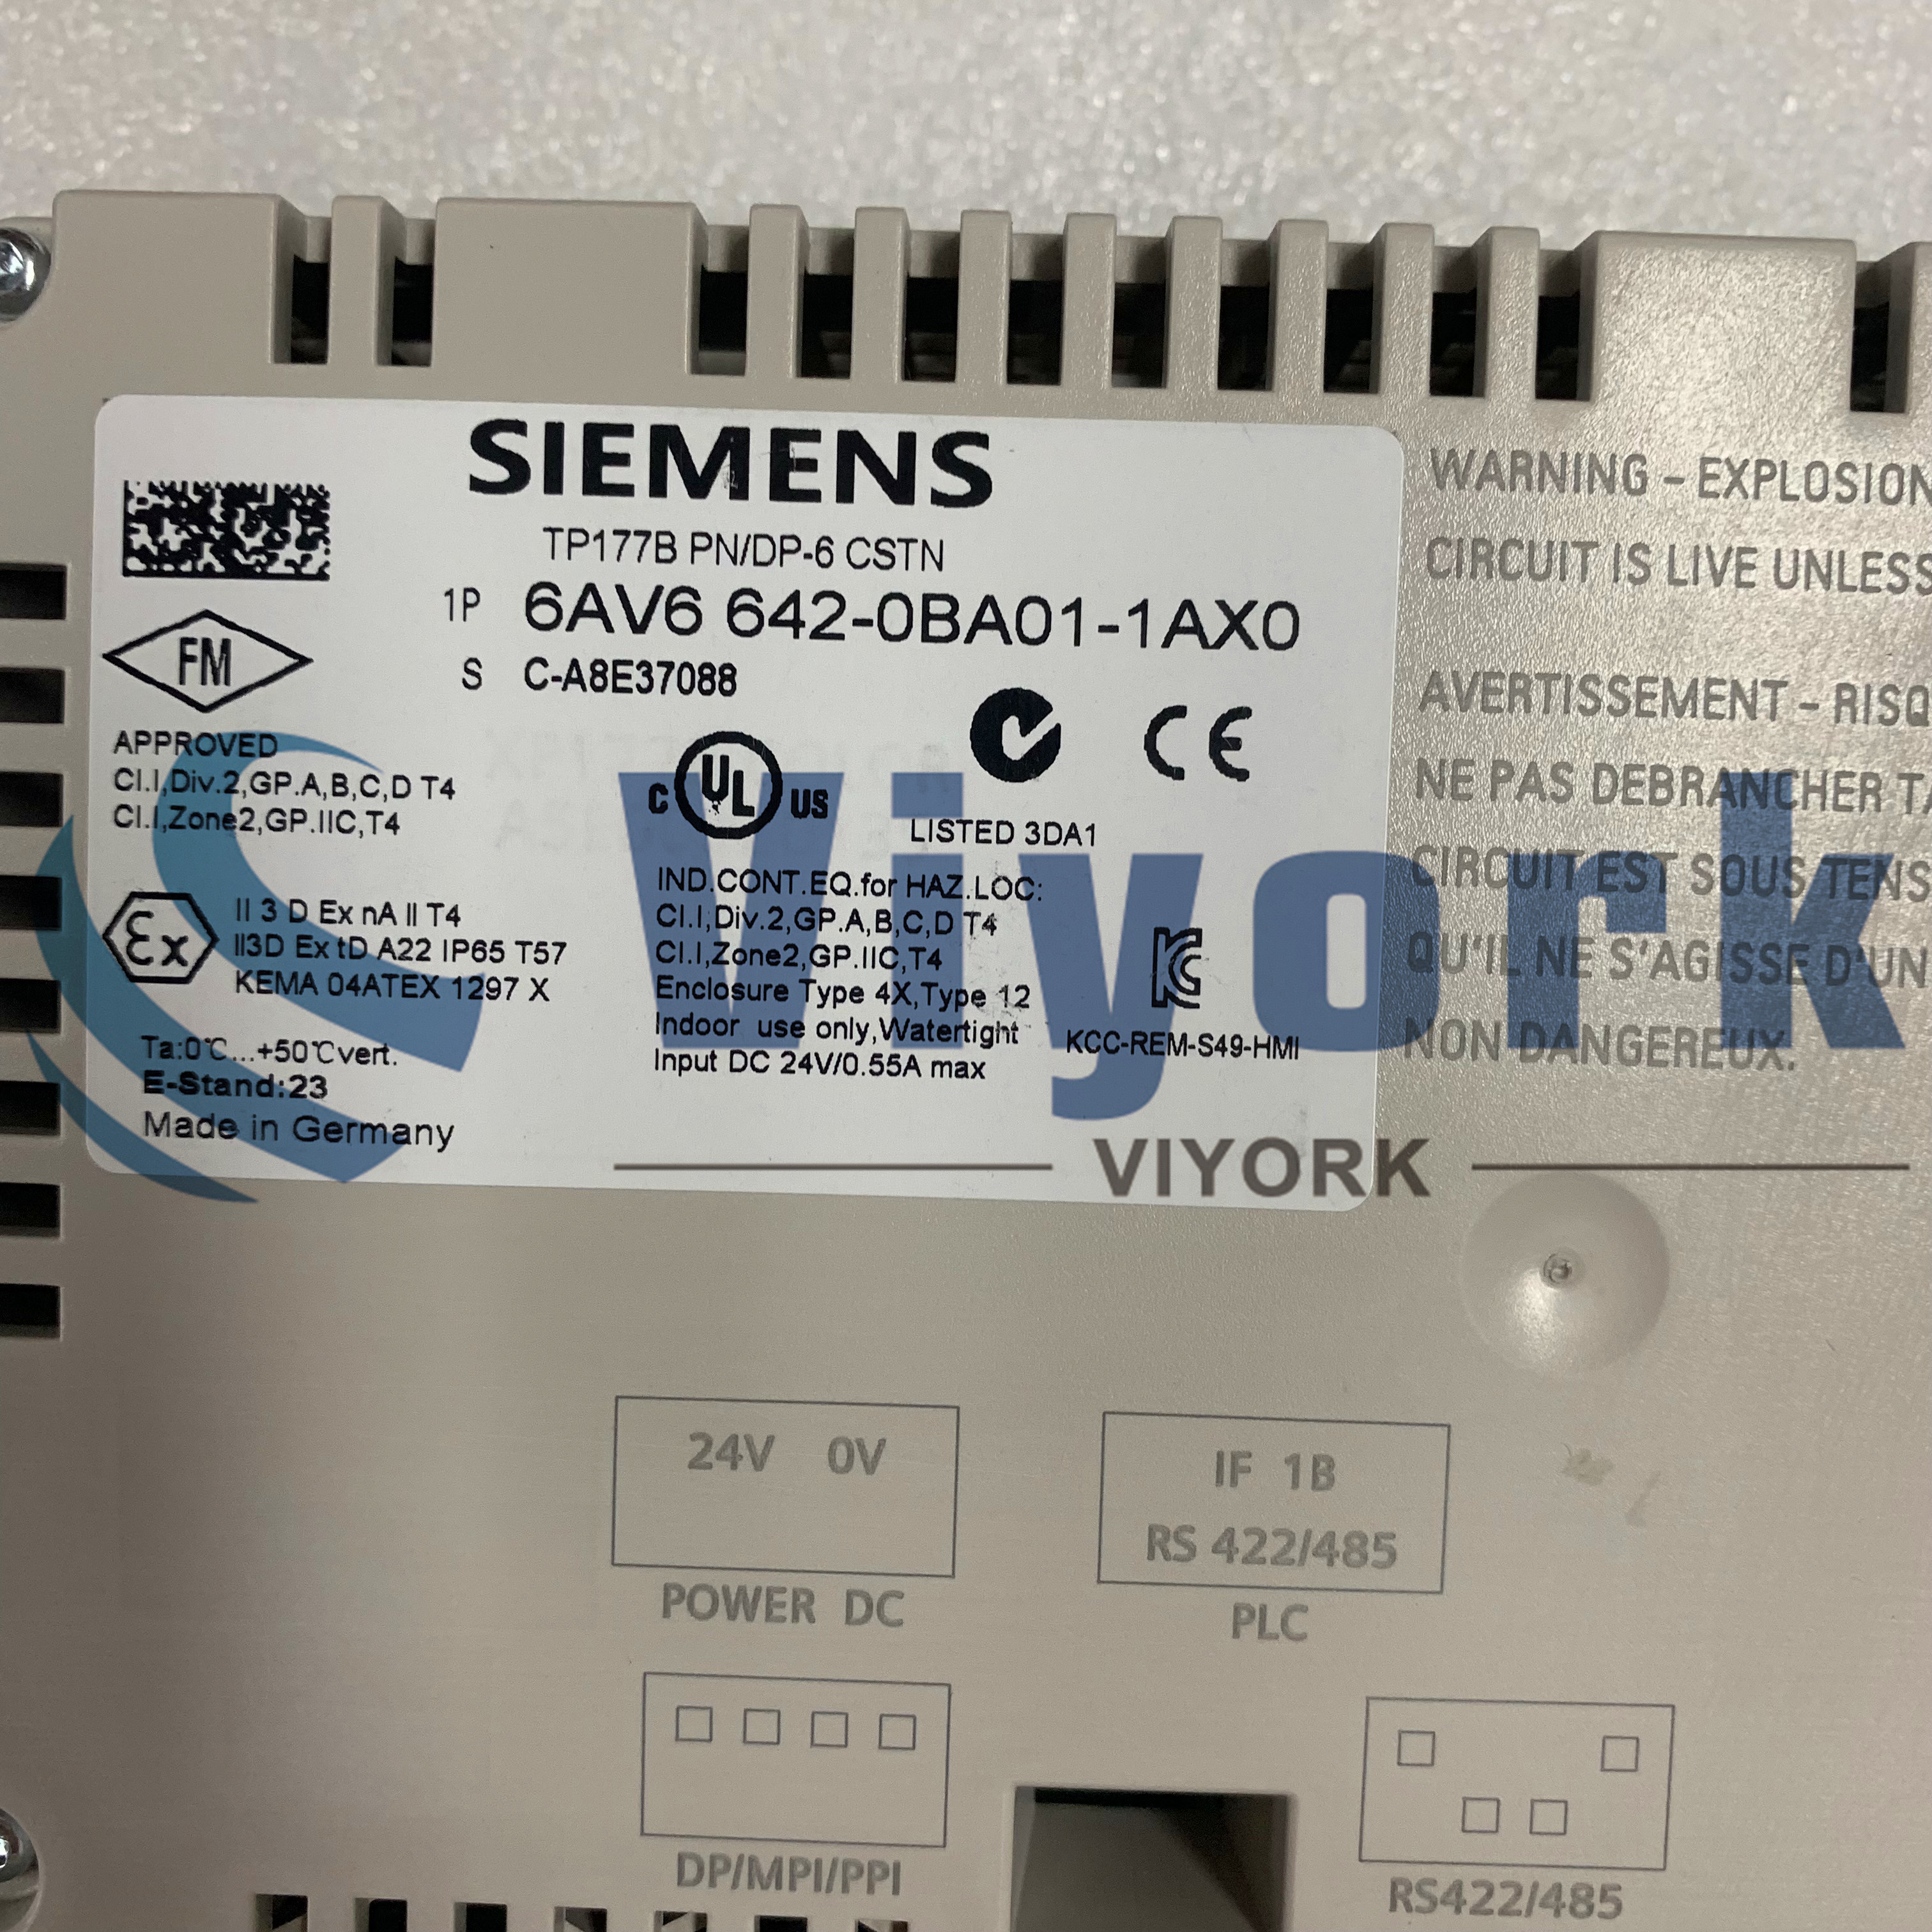 Siemens 6AV6642-0BA01-1AX0 5.7 INCH SCREEN DIAGONAL 256 NUMBER OF COLORS NEW